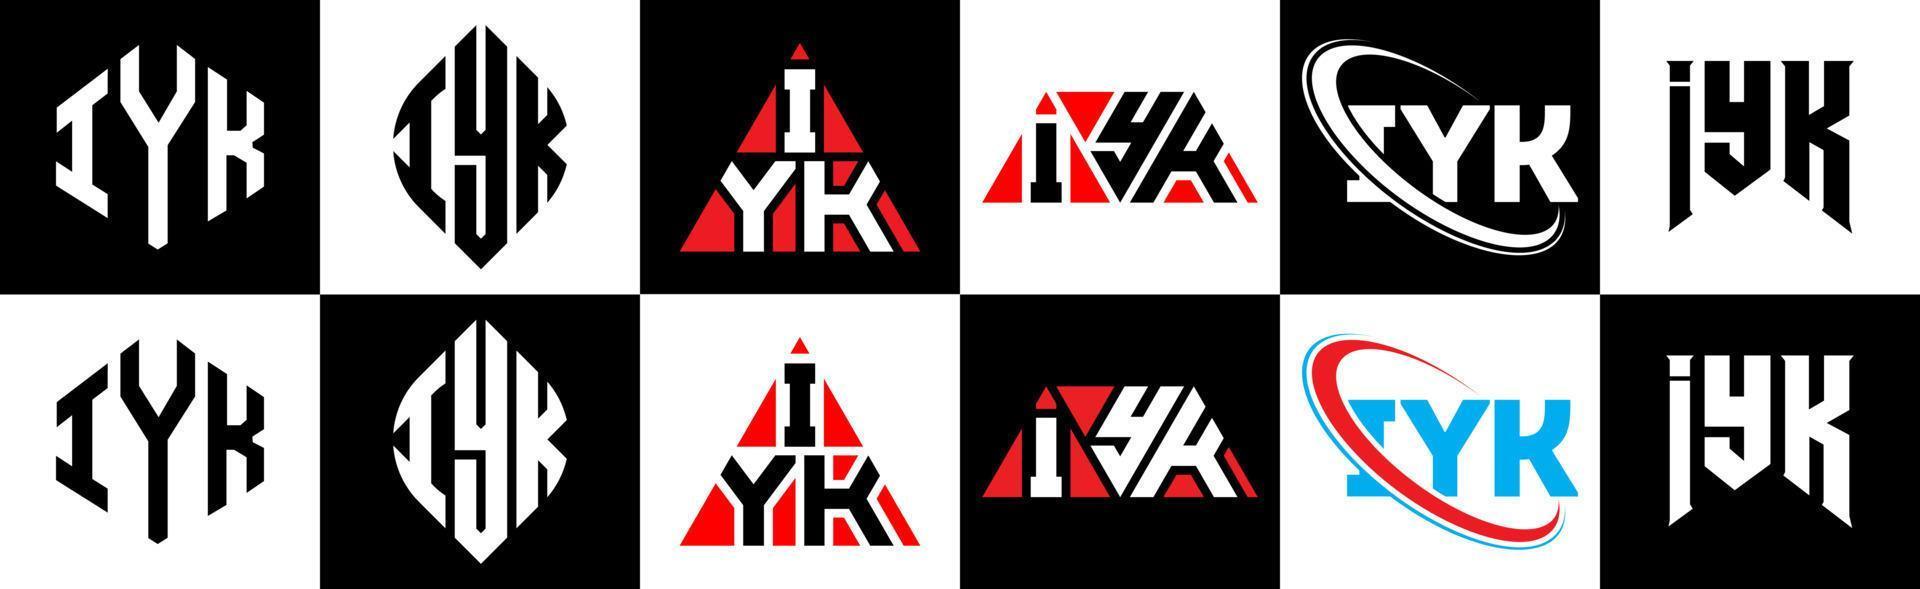 design de logotipo de carta iyk em seis estilos. polígono iyk, círculo, triângulo, hexágono, estilo plano e simples com logotipo de carta de variação de cor preto e branco definido em uma prancheta. logotipo iyk minimalista e clássico vetor